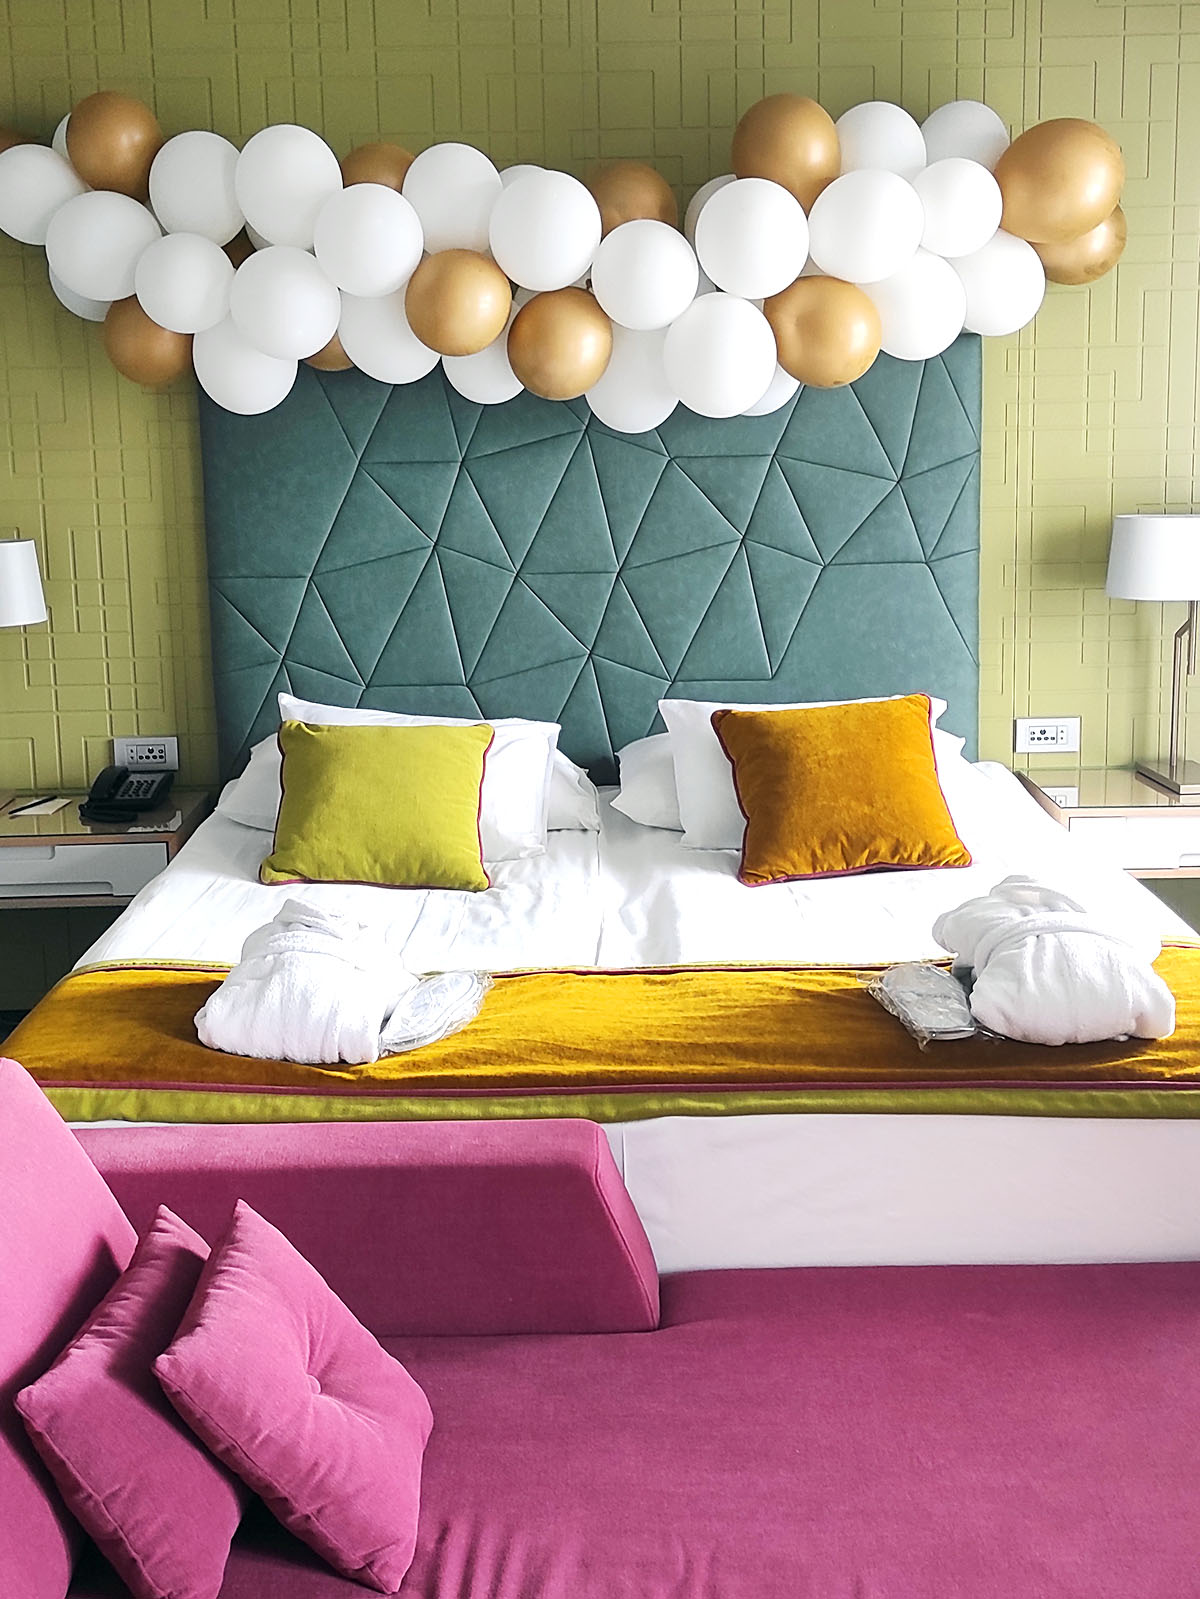 Bled Rose Hotel: prvi Instagram hotel na našim prostorima koji nas je oduševio!